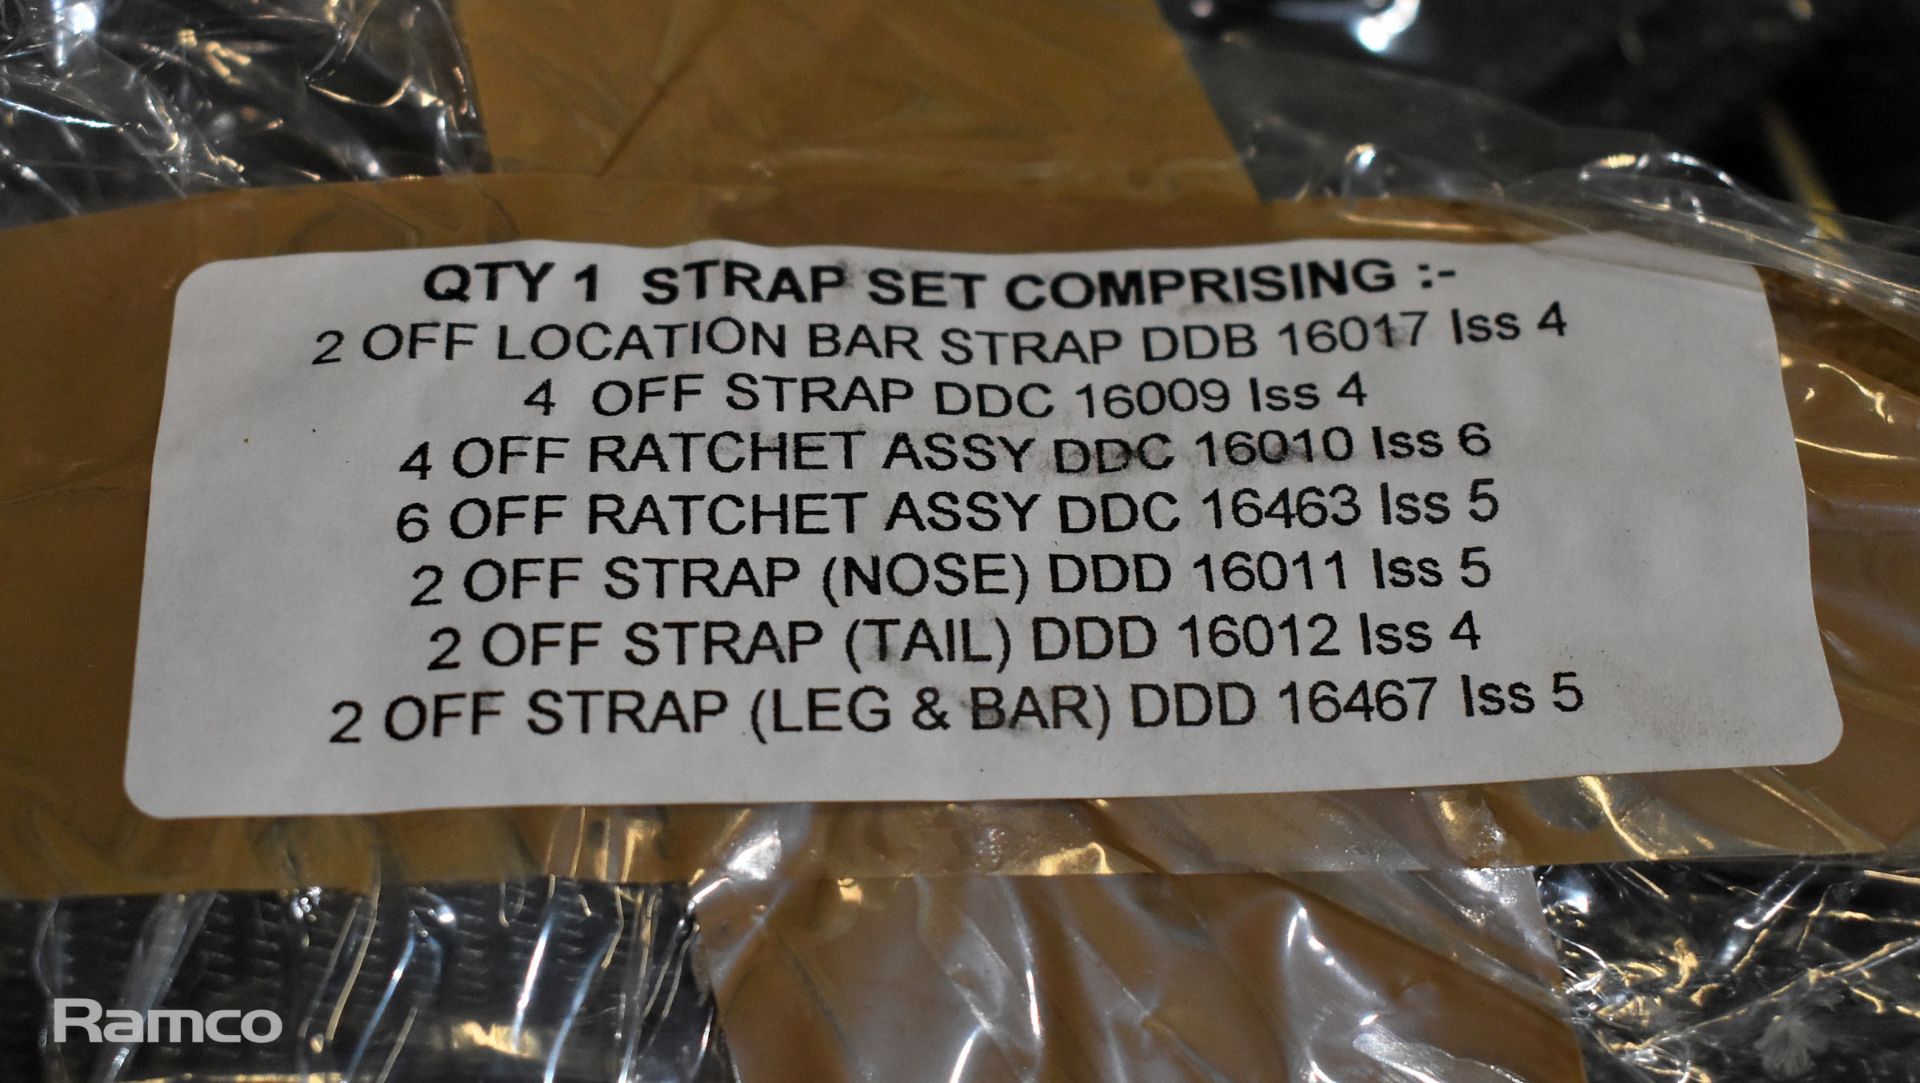 4x Ratchet and strap sets - 22 piece per set - Image 8 of 8